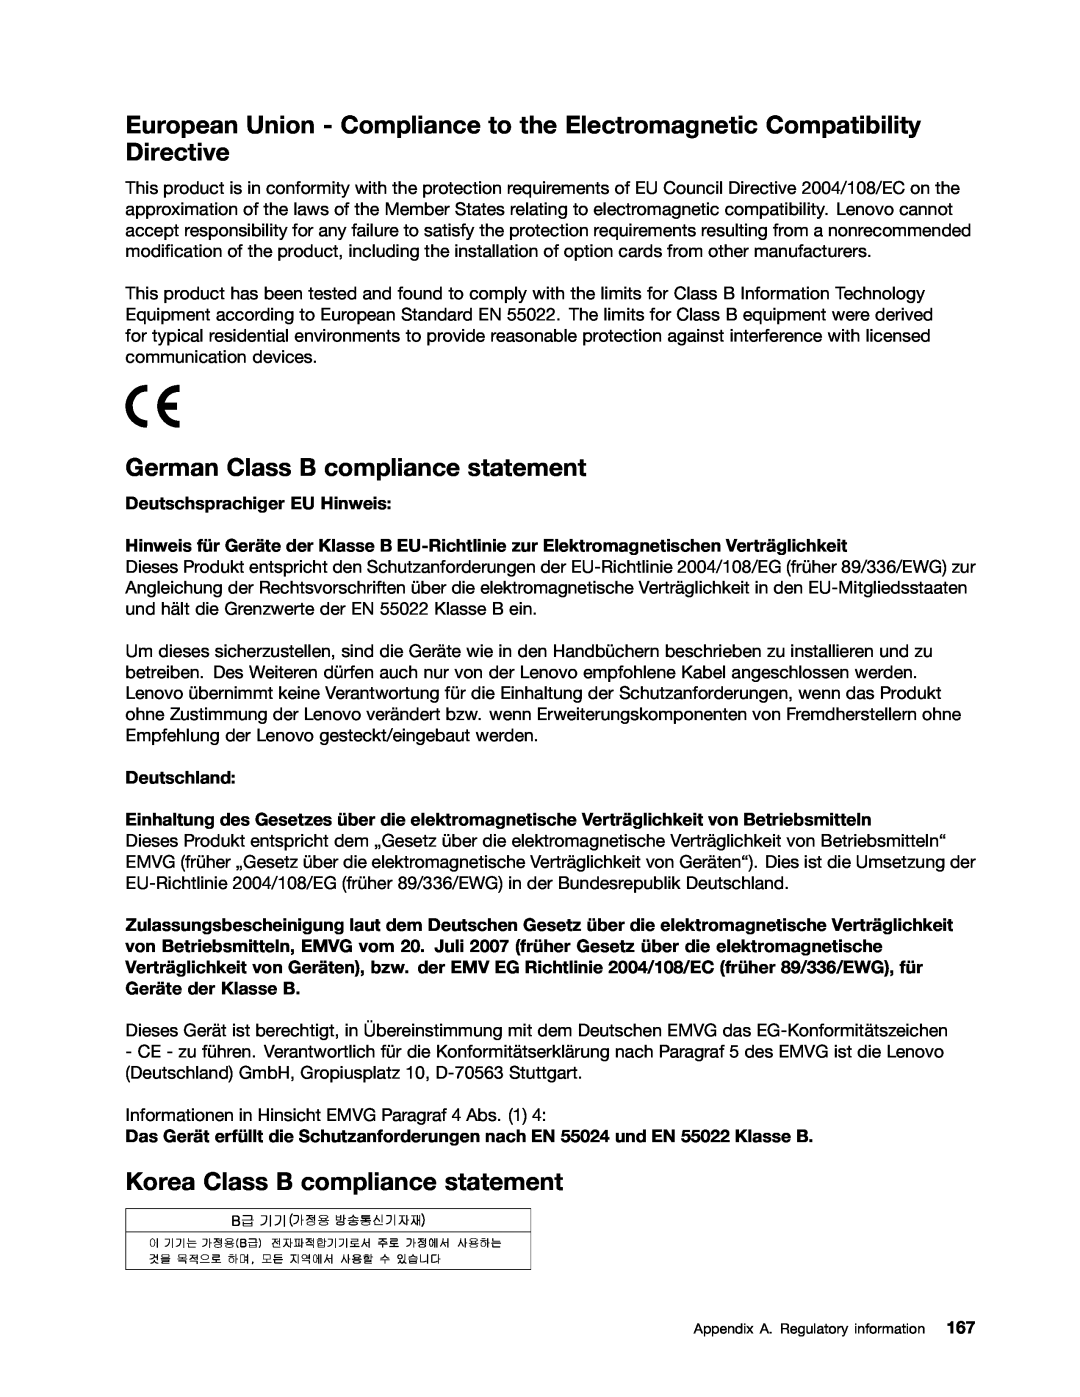 Lenovo 114155U, E520 German Class B compliance statement, Korea Class B compliance statement, Deutschsprachiger EU Hinweis 